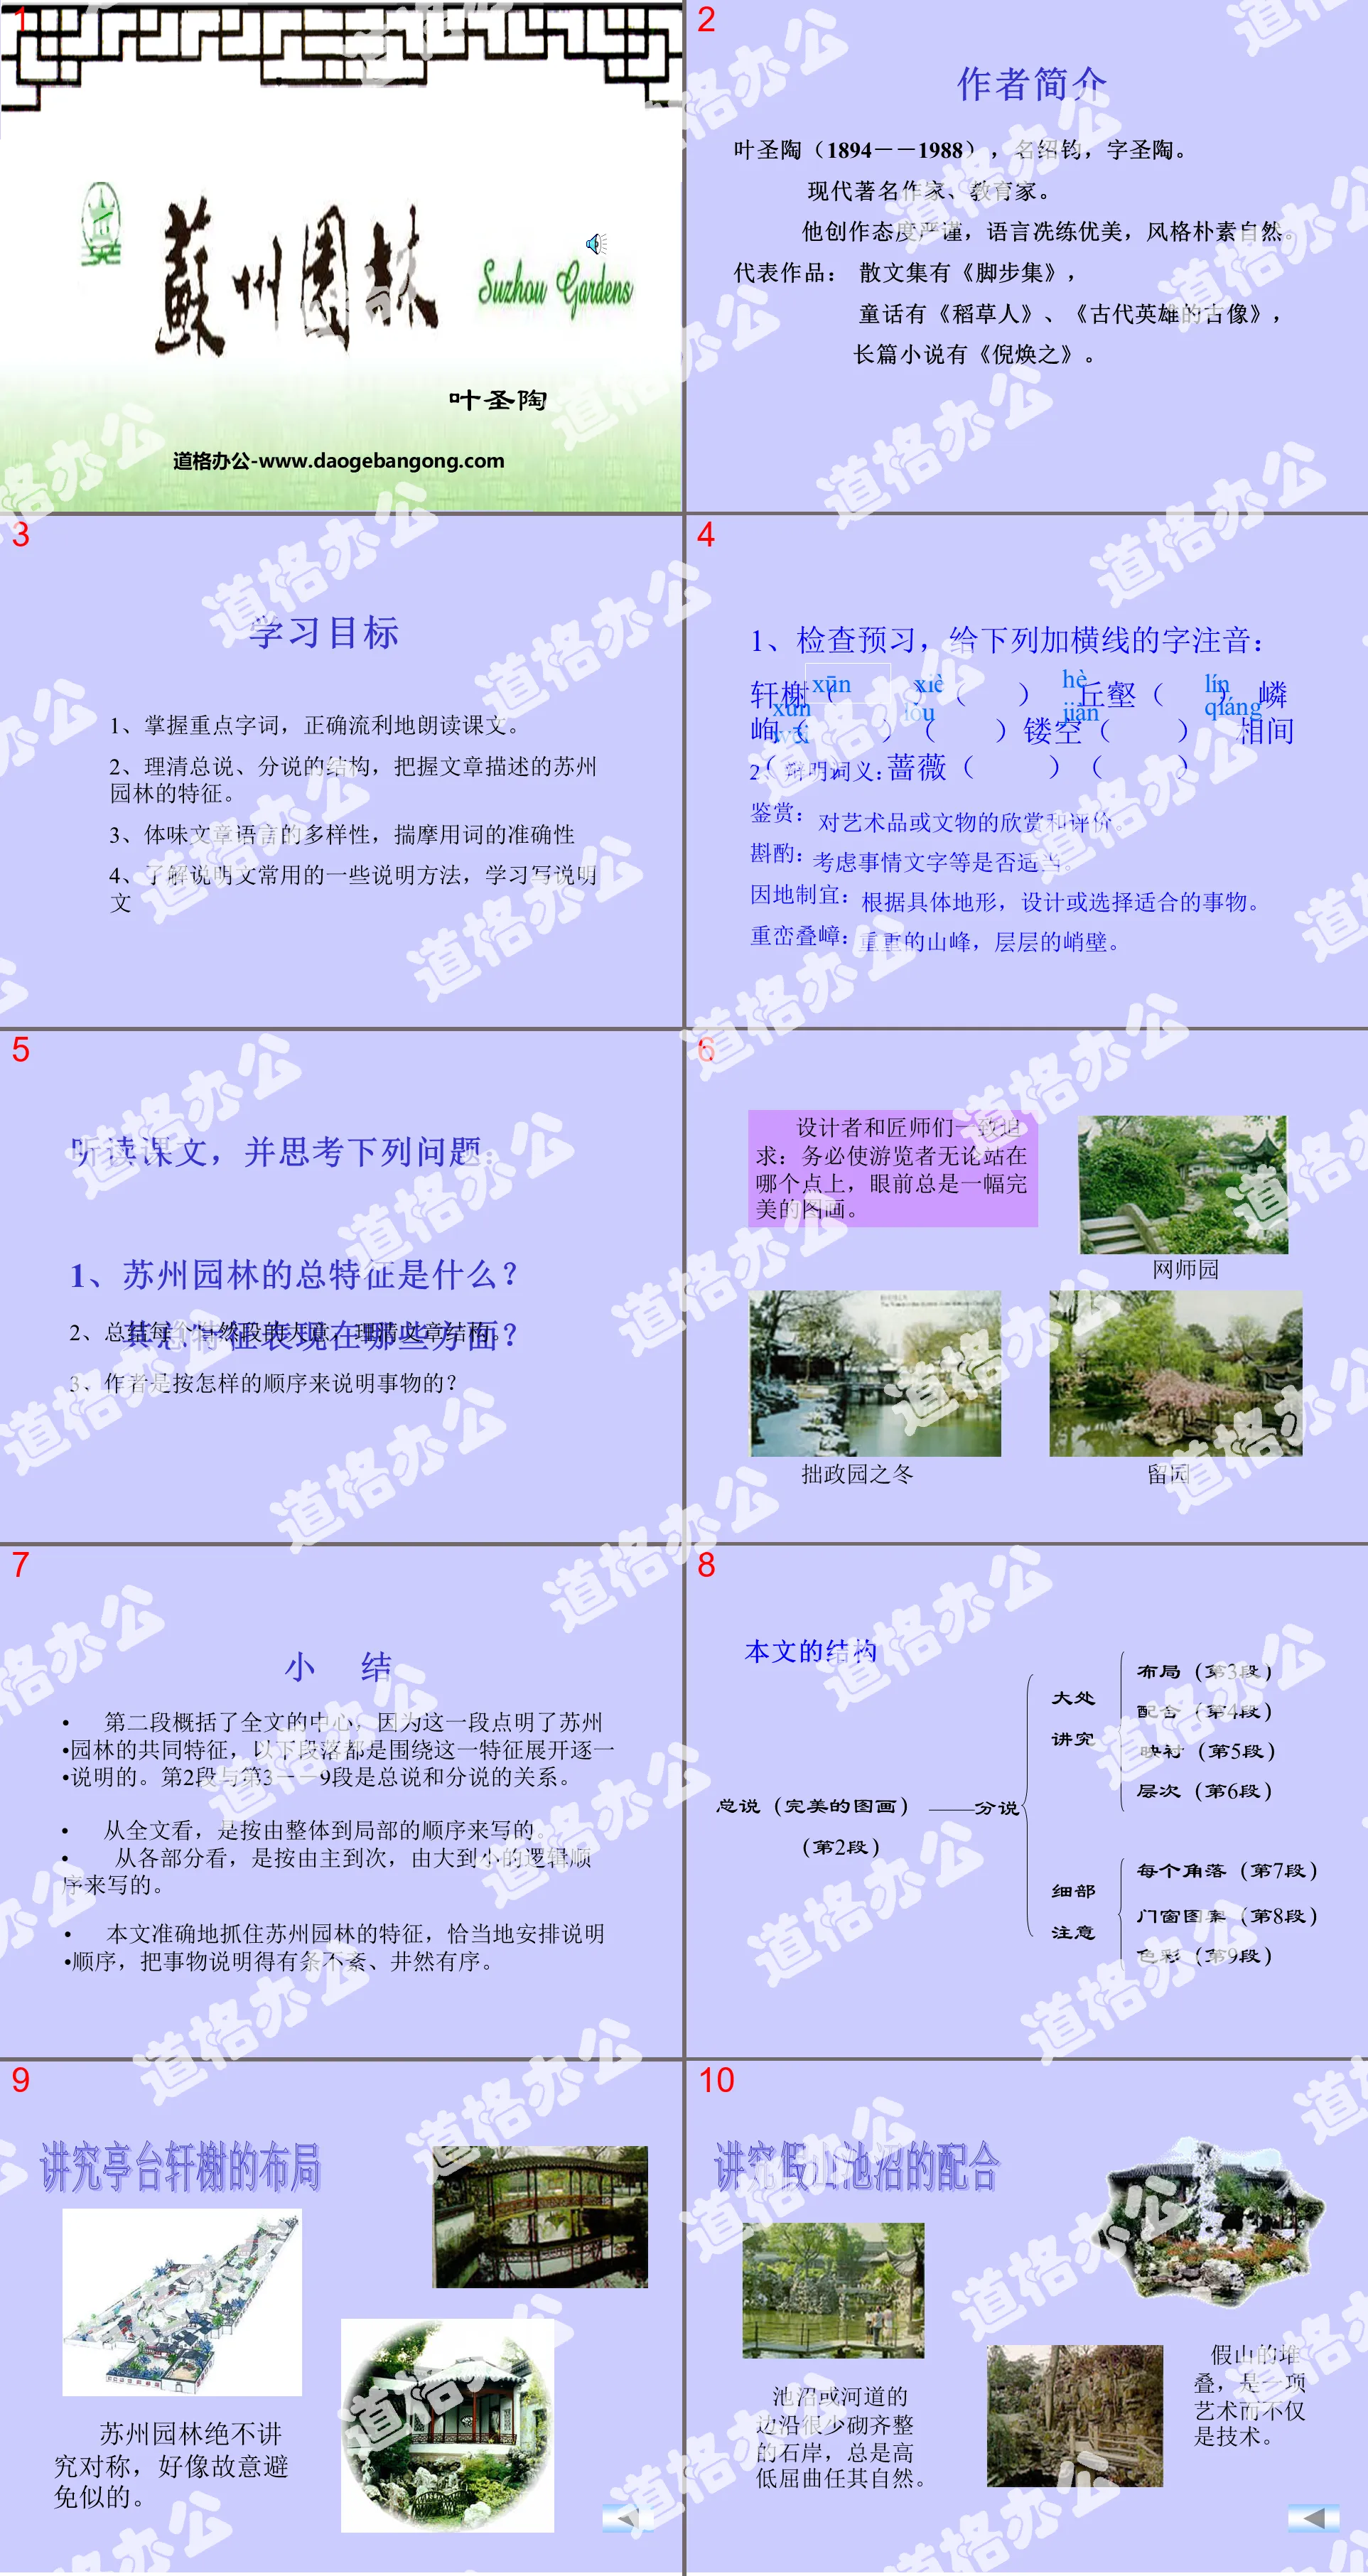 "Suzhou Gardens" PPT courseware 5